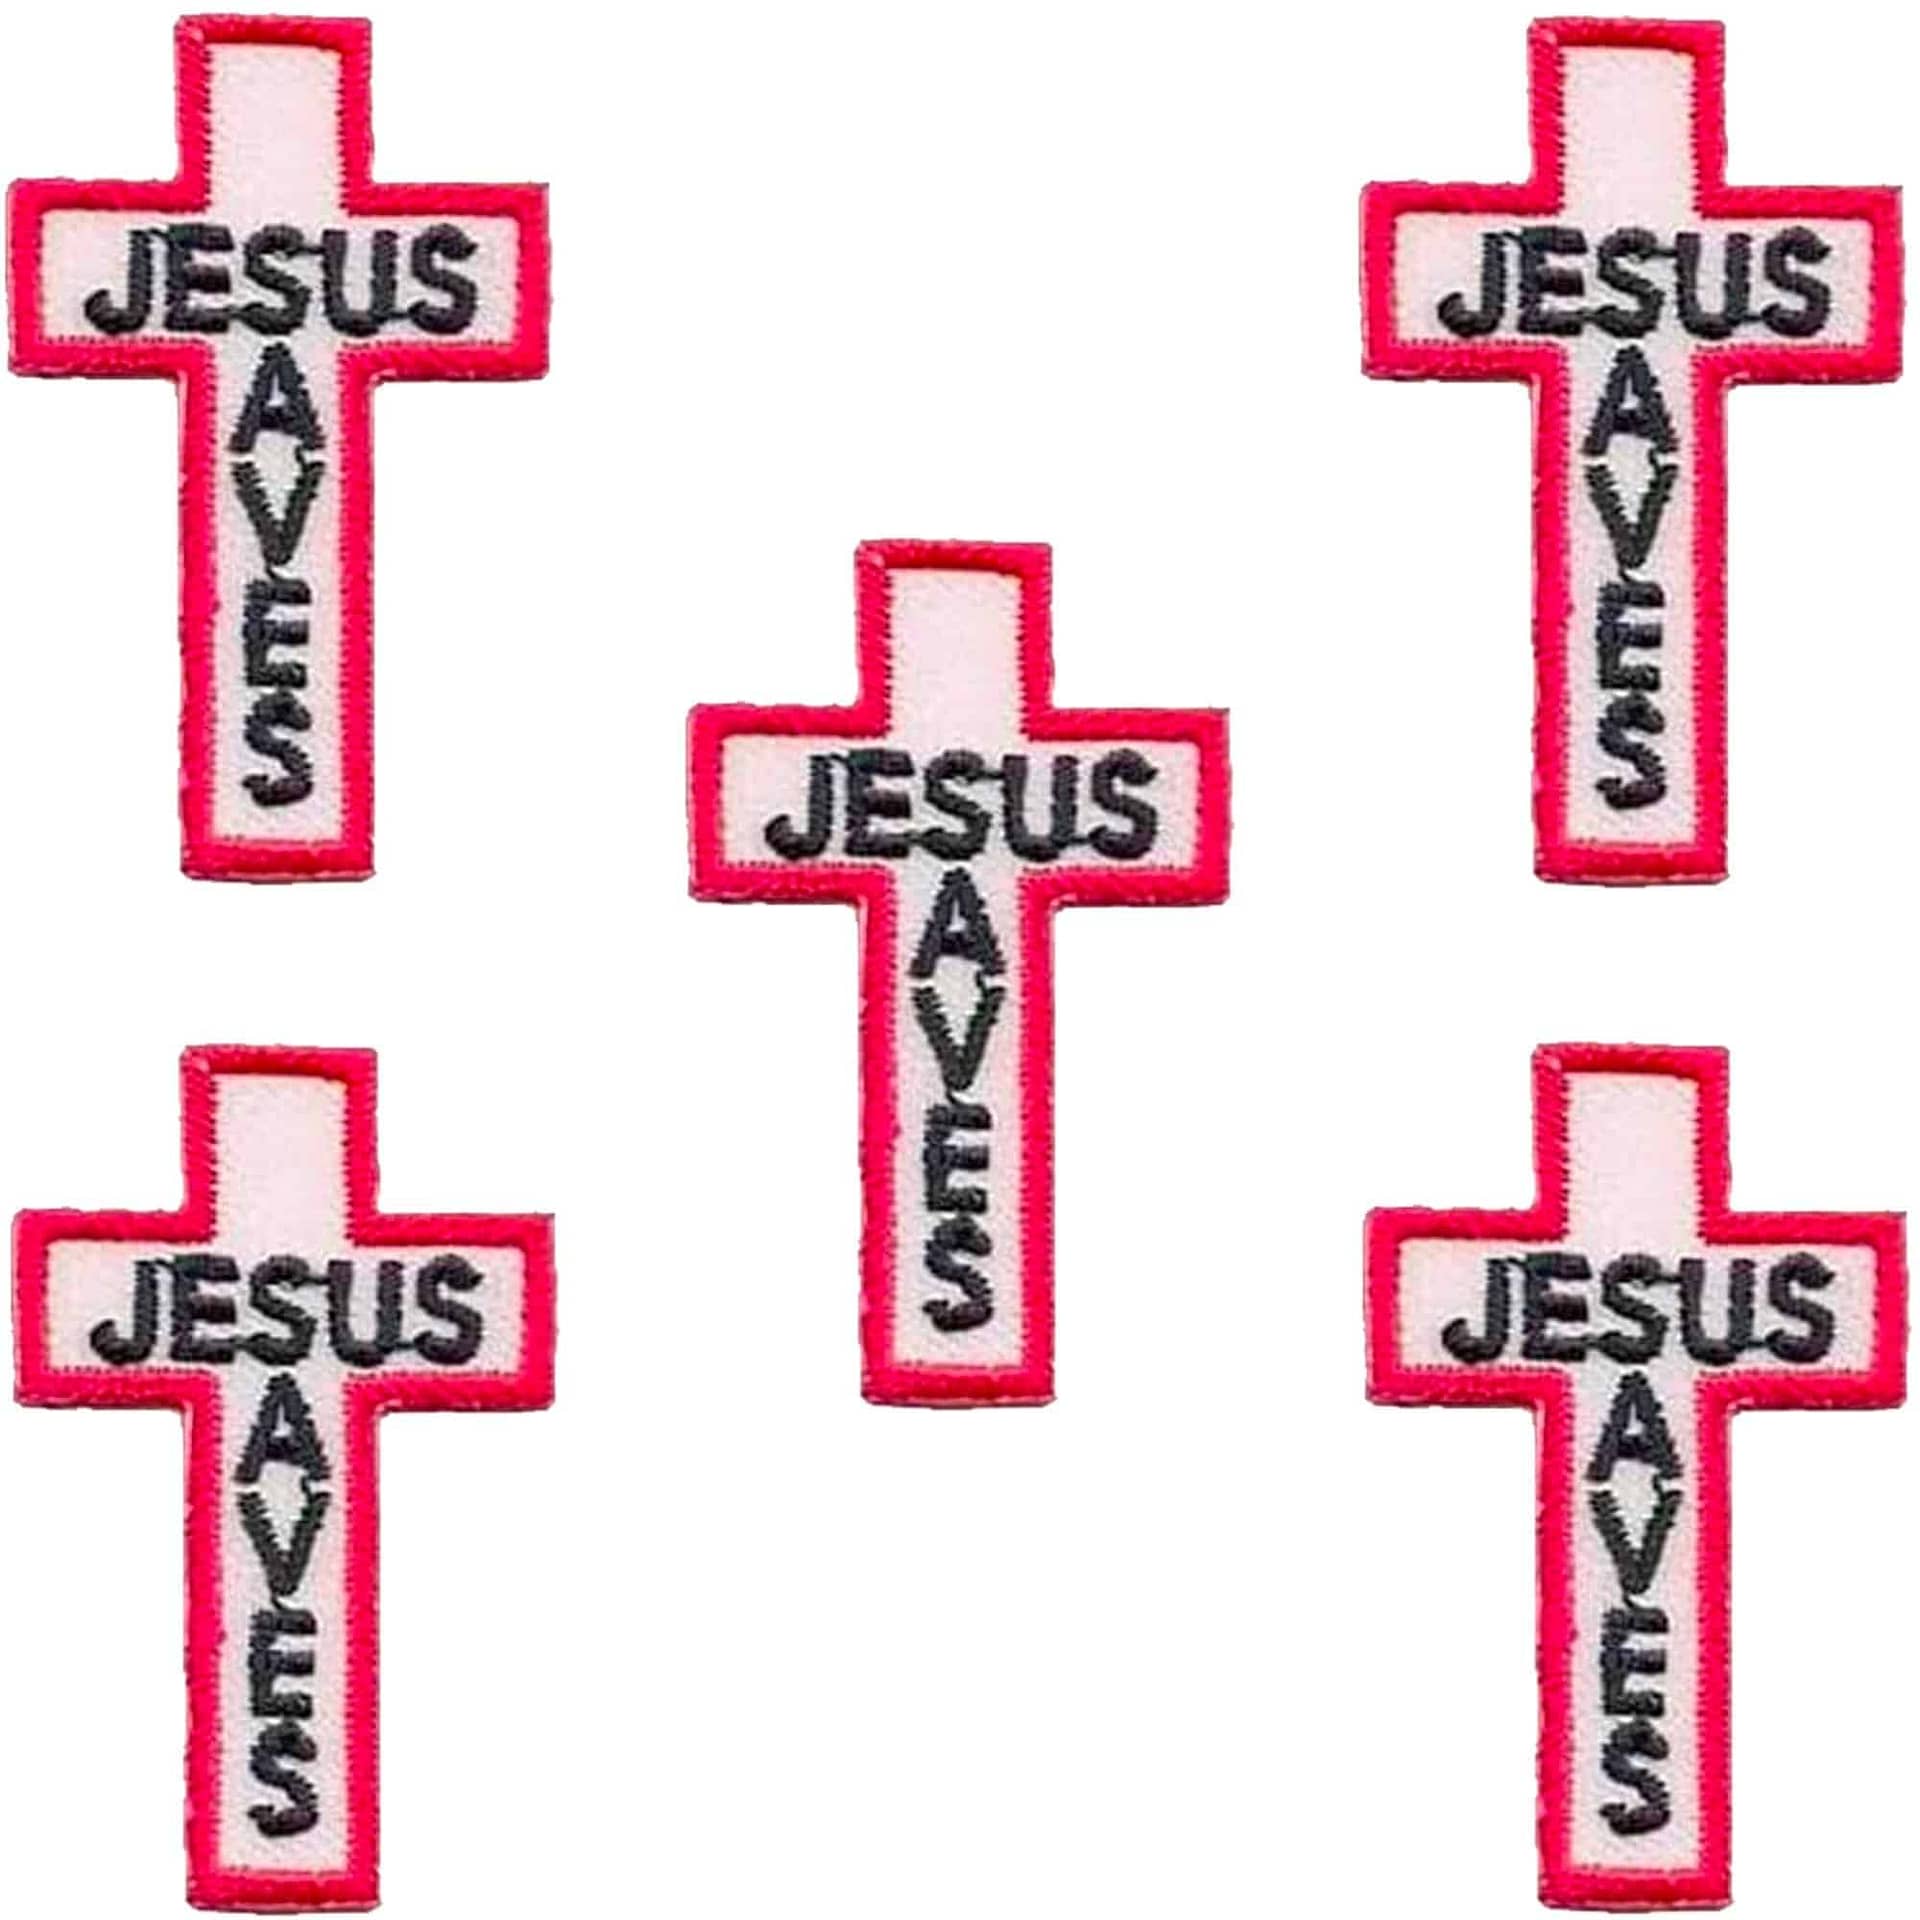 Jesus Saves Cross Iron On Patch Applique